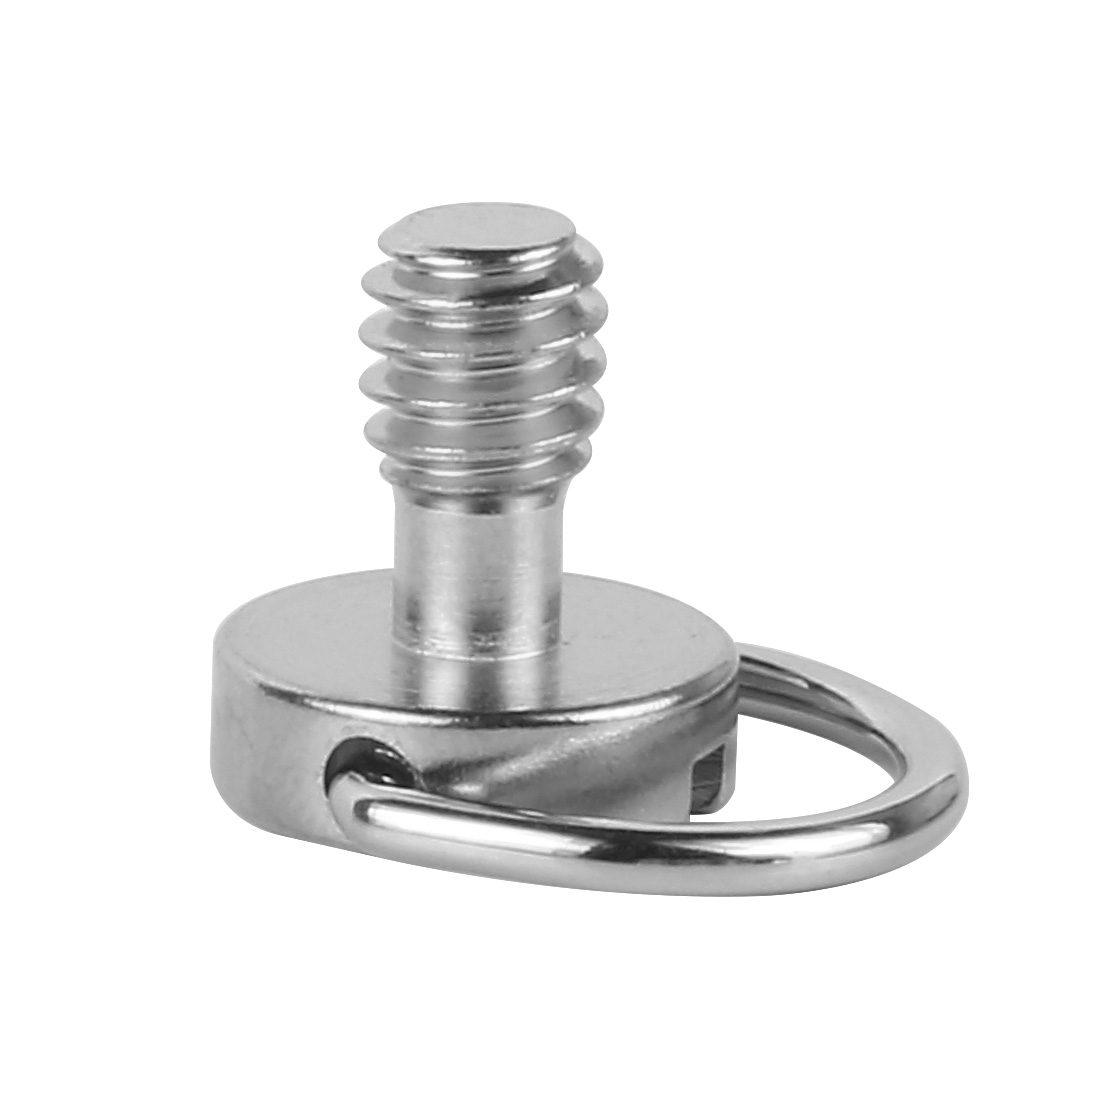 BGNING Universal Aluminum alloy Metal Camera Quick Release Plate D-Ring Screw Thread 1/4 Screw For Camera